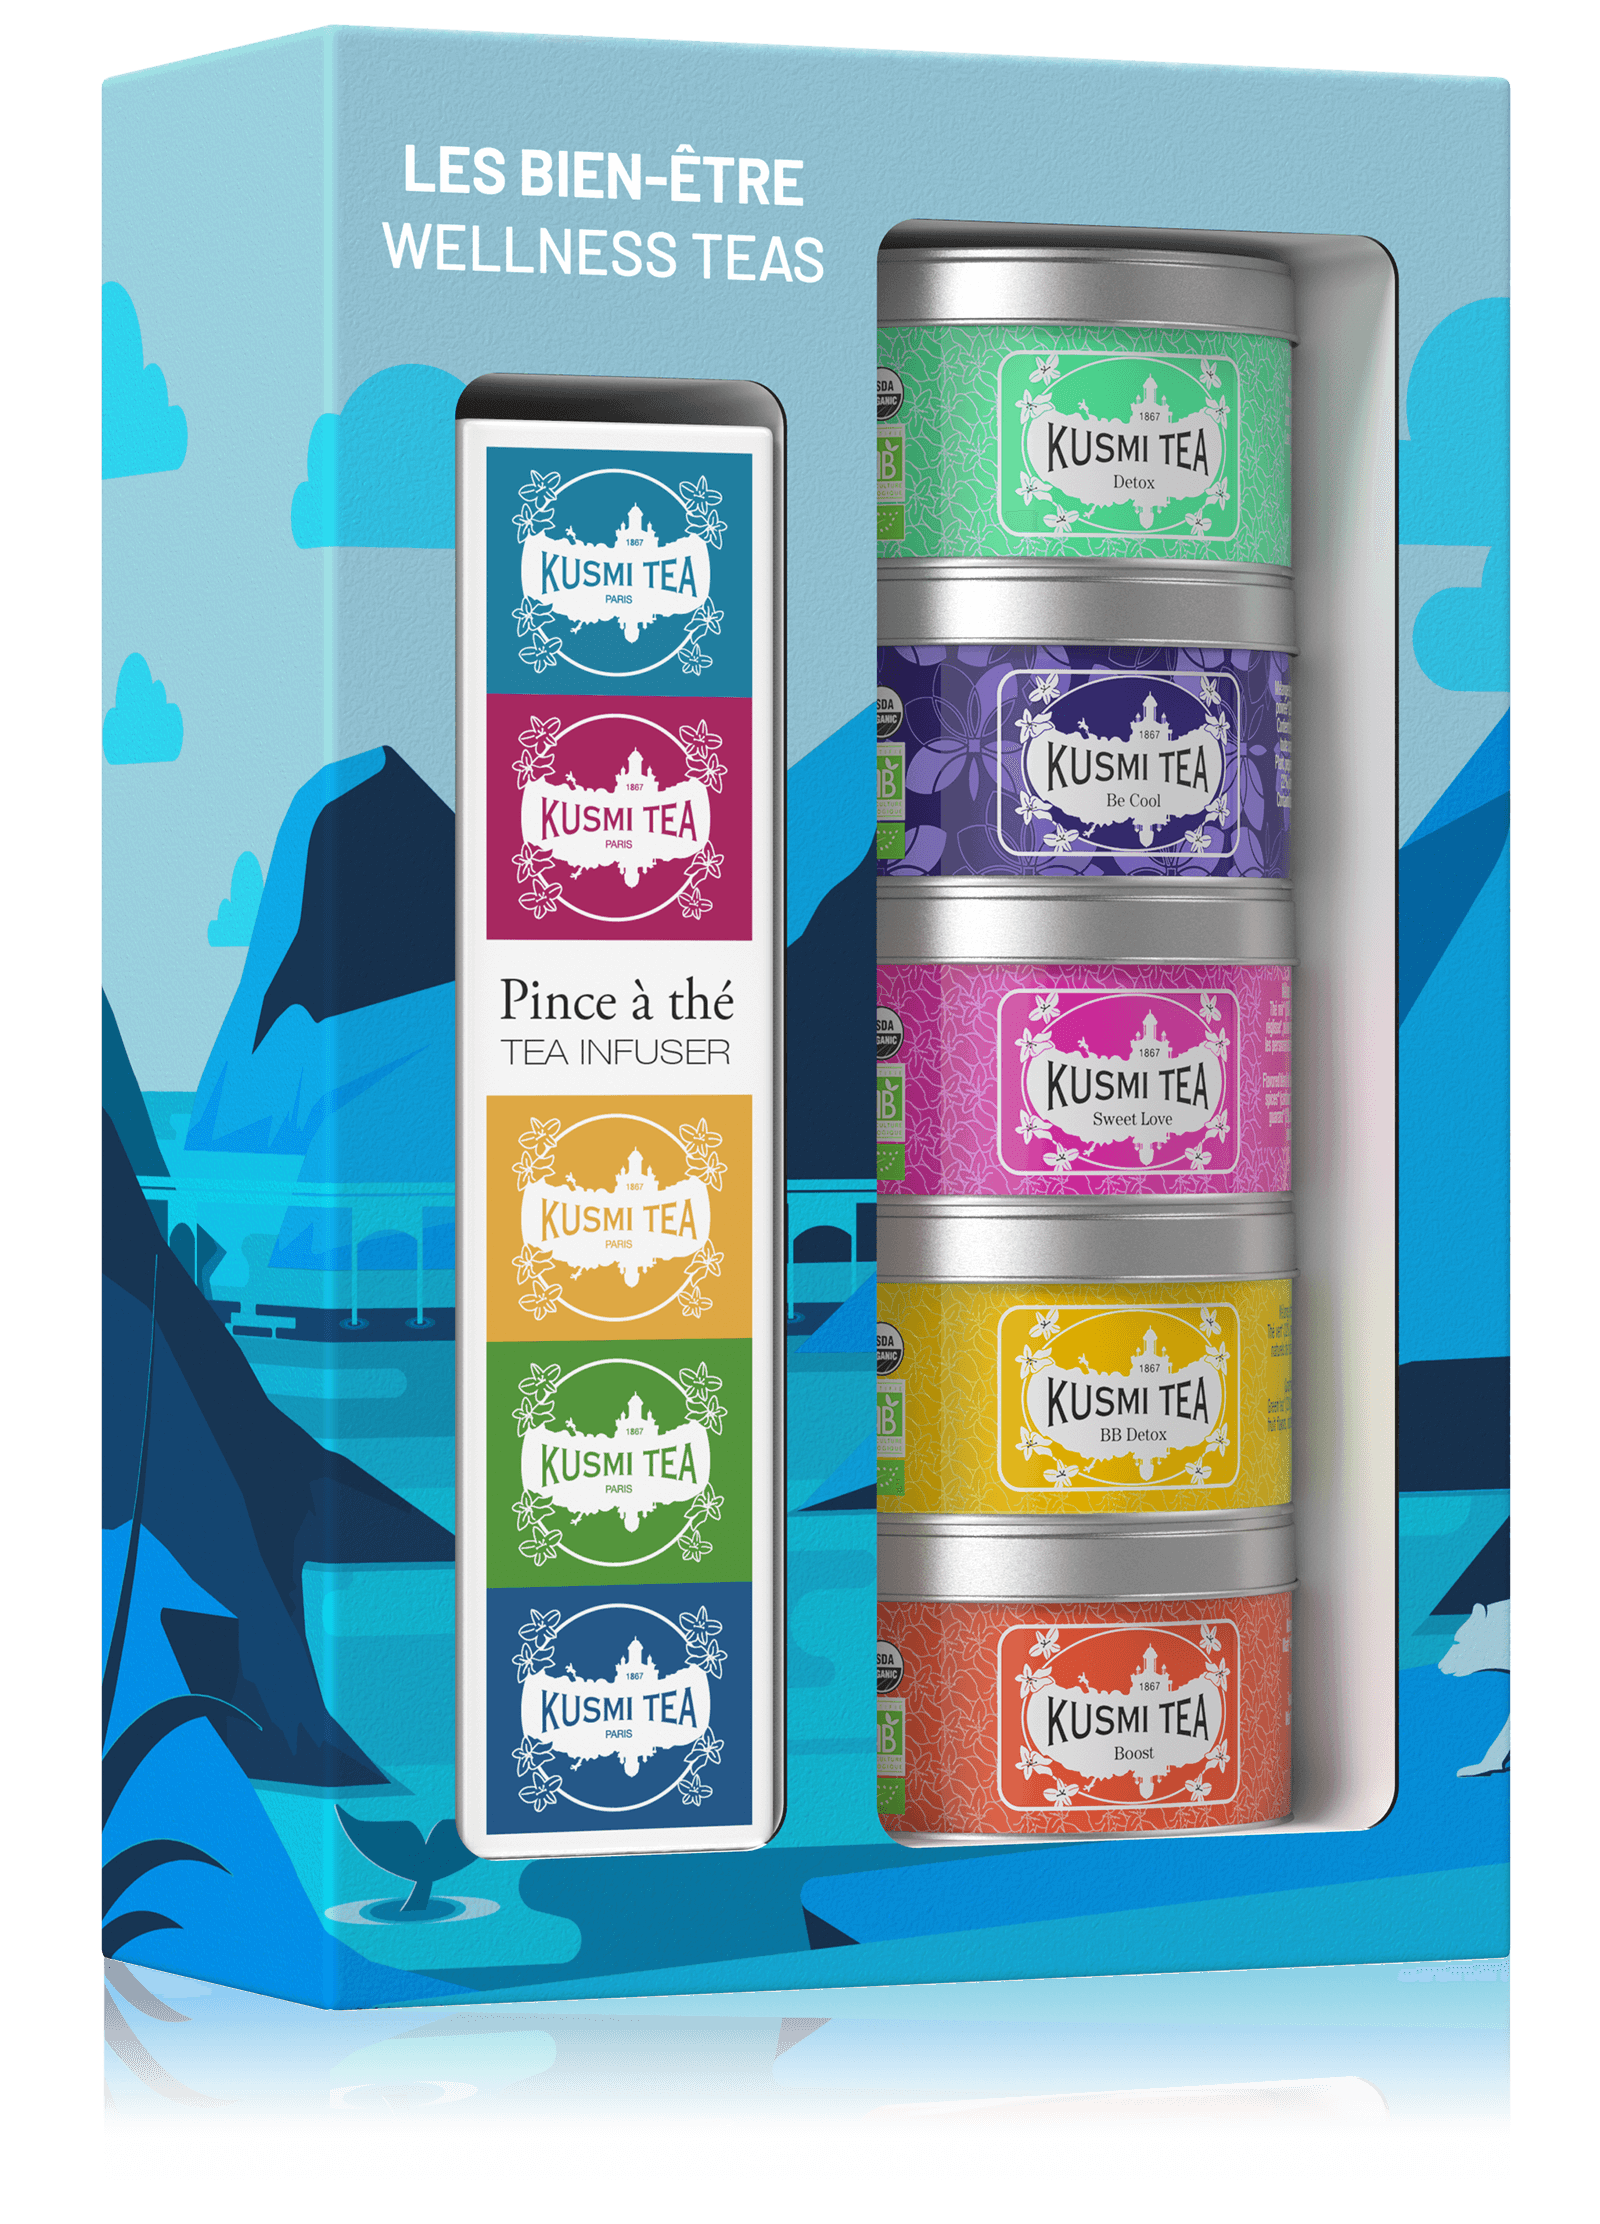 Kusmi Tea Wellness Gift Set - Five Loose Teas in Miniature Tins - Flavored  Blends of Green, Mate & Herbal Teas - Includes Detox, BB Detox, Boost,  Sweet Love & Be Cool 